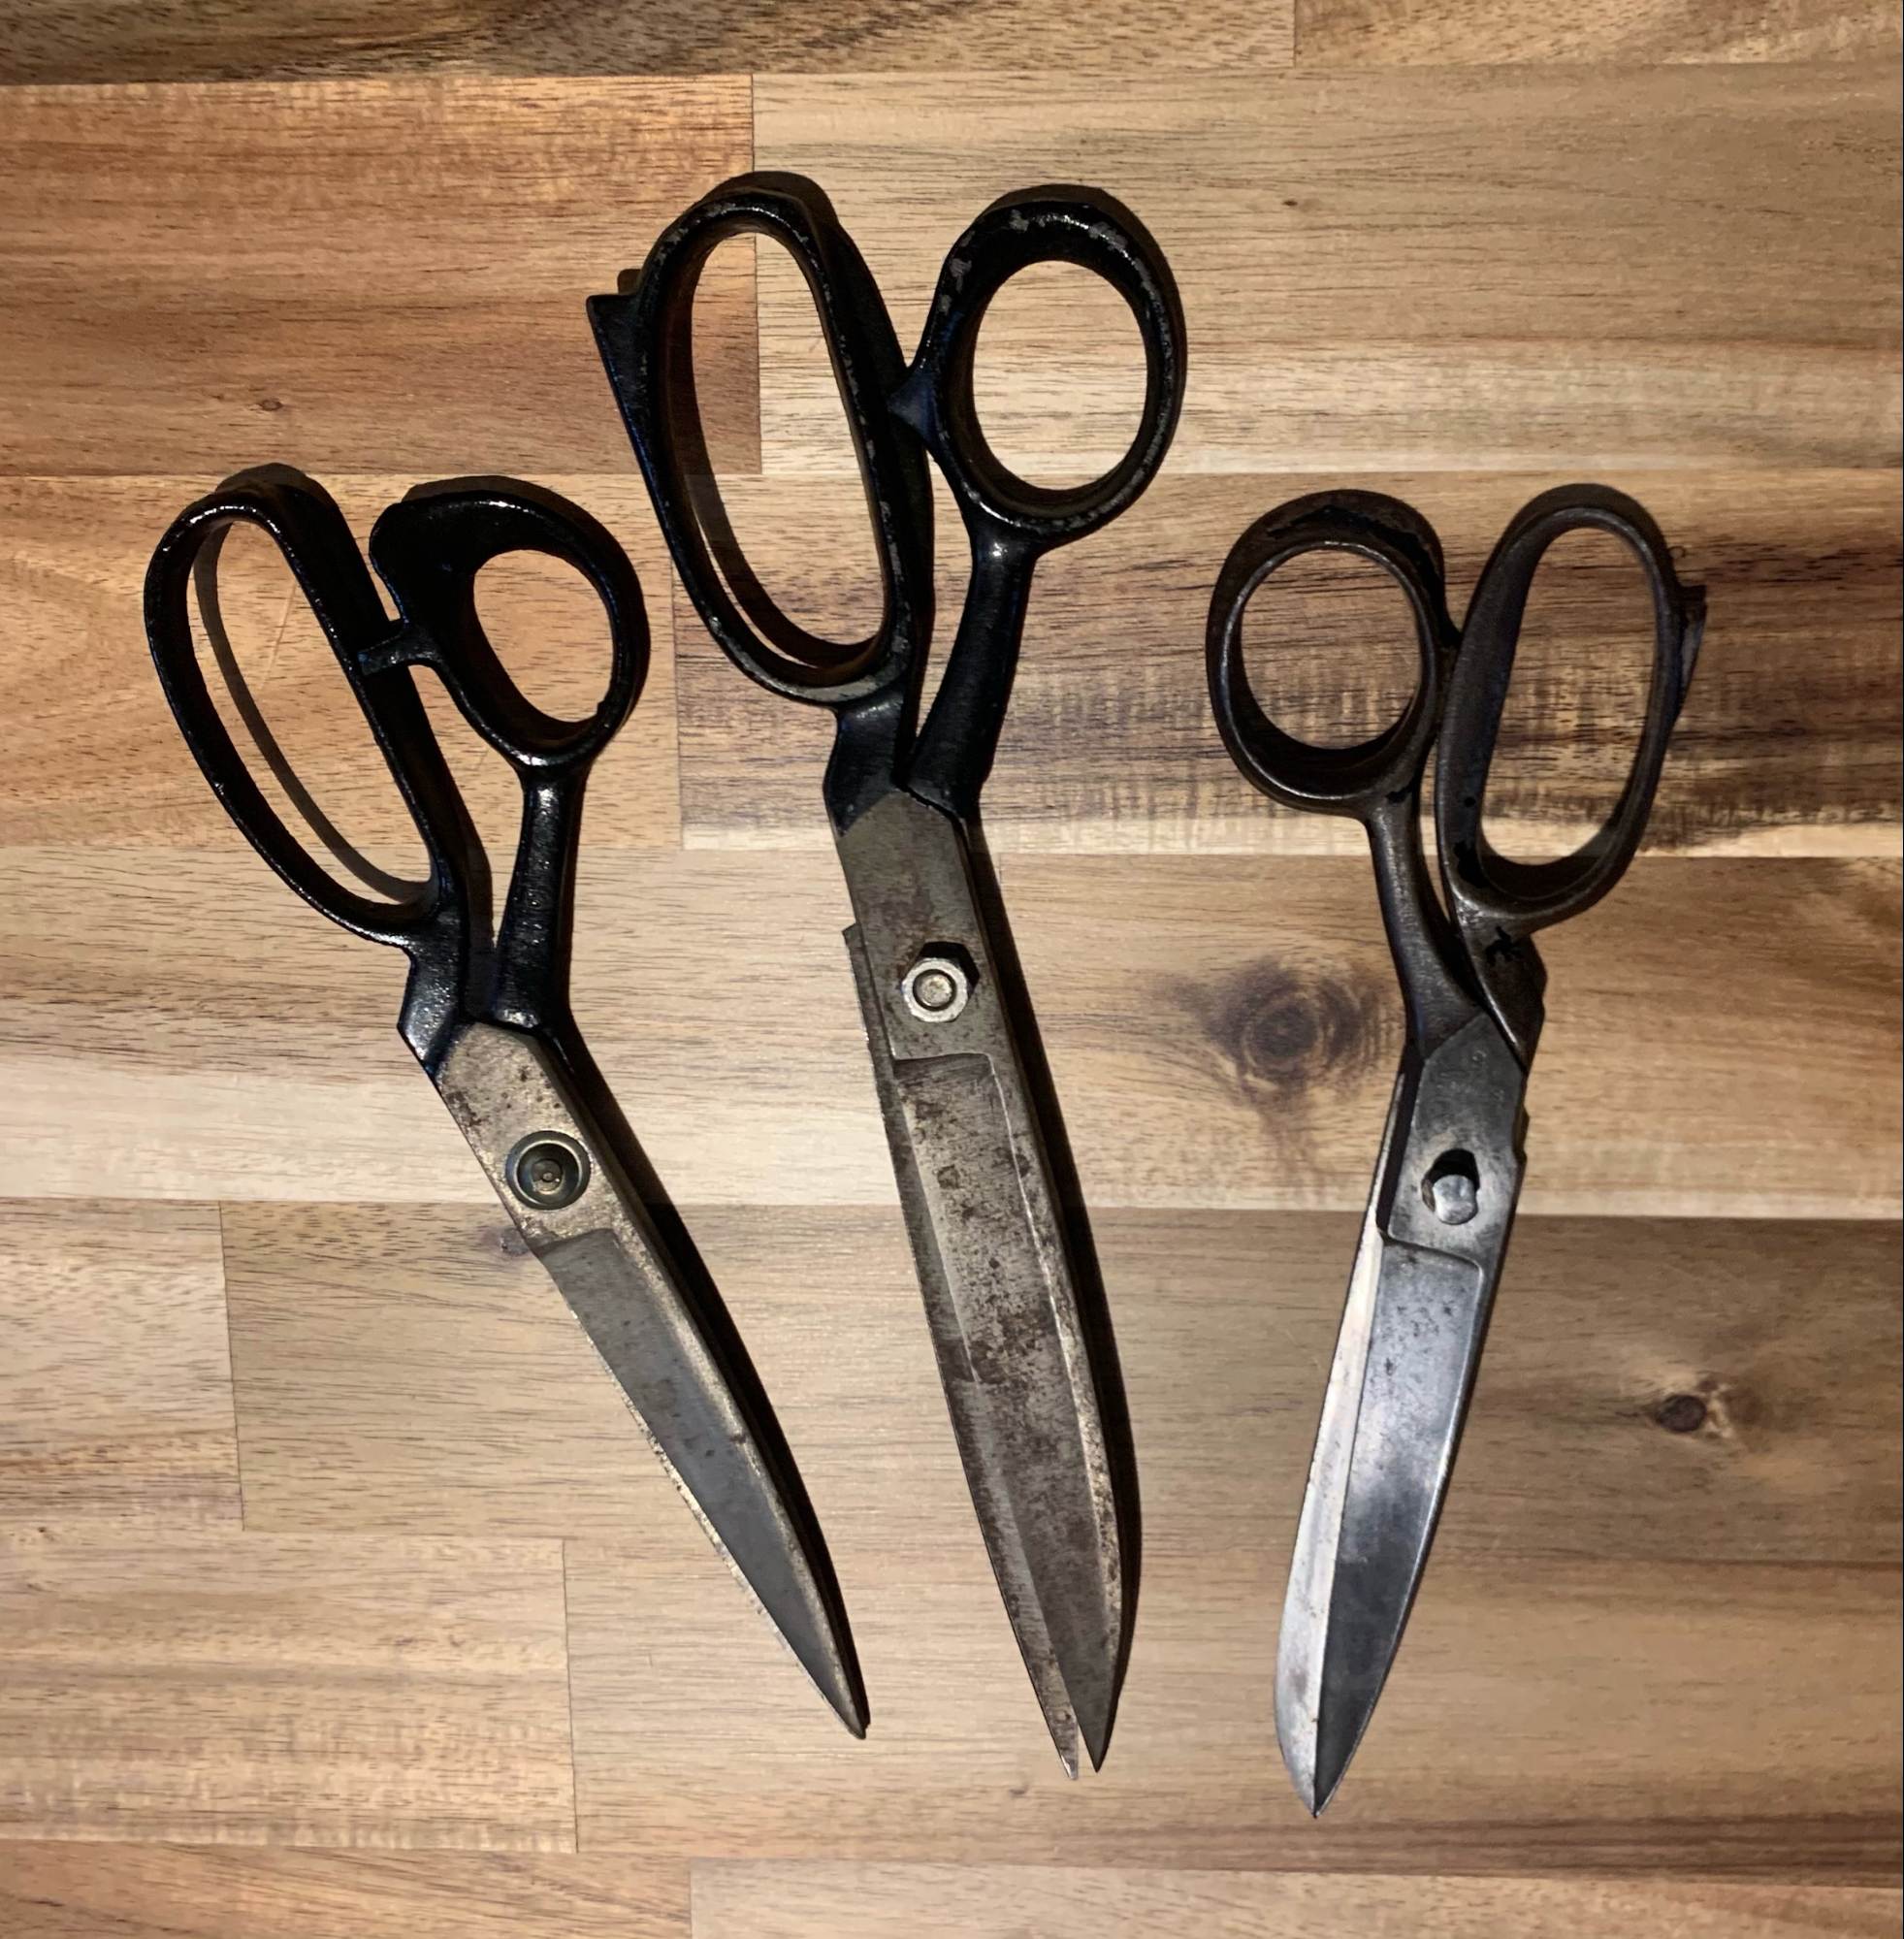 Antique Malaysian items - scissors